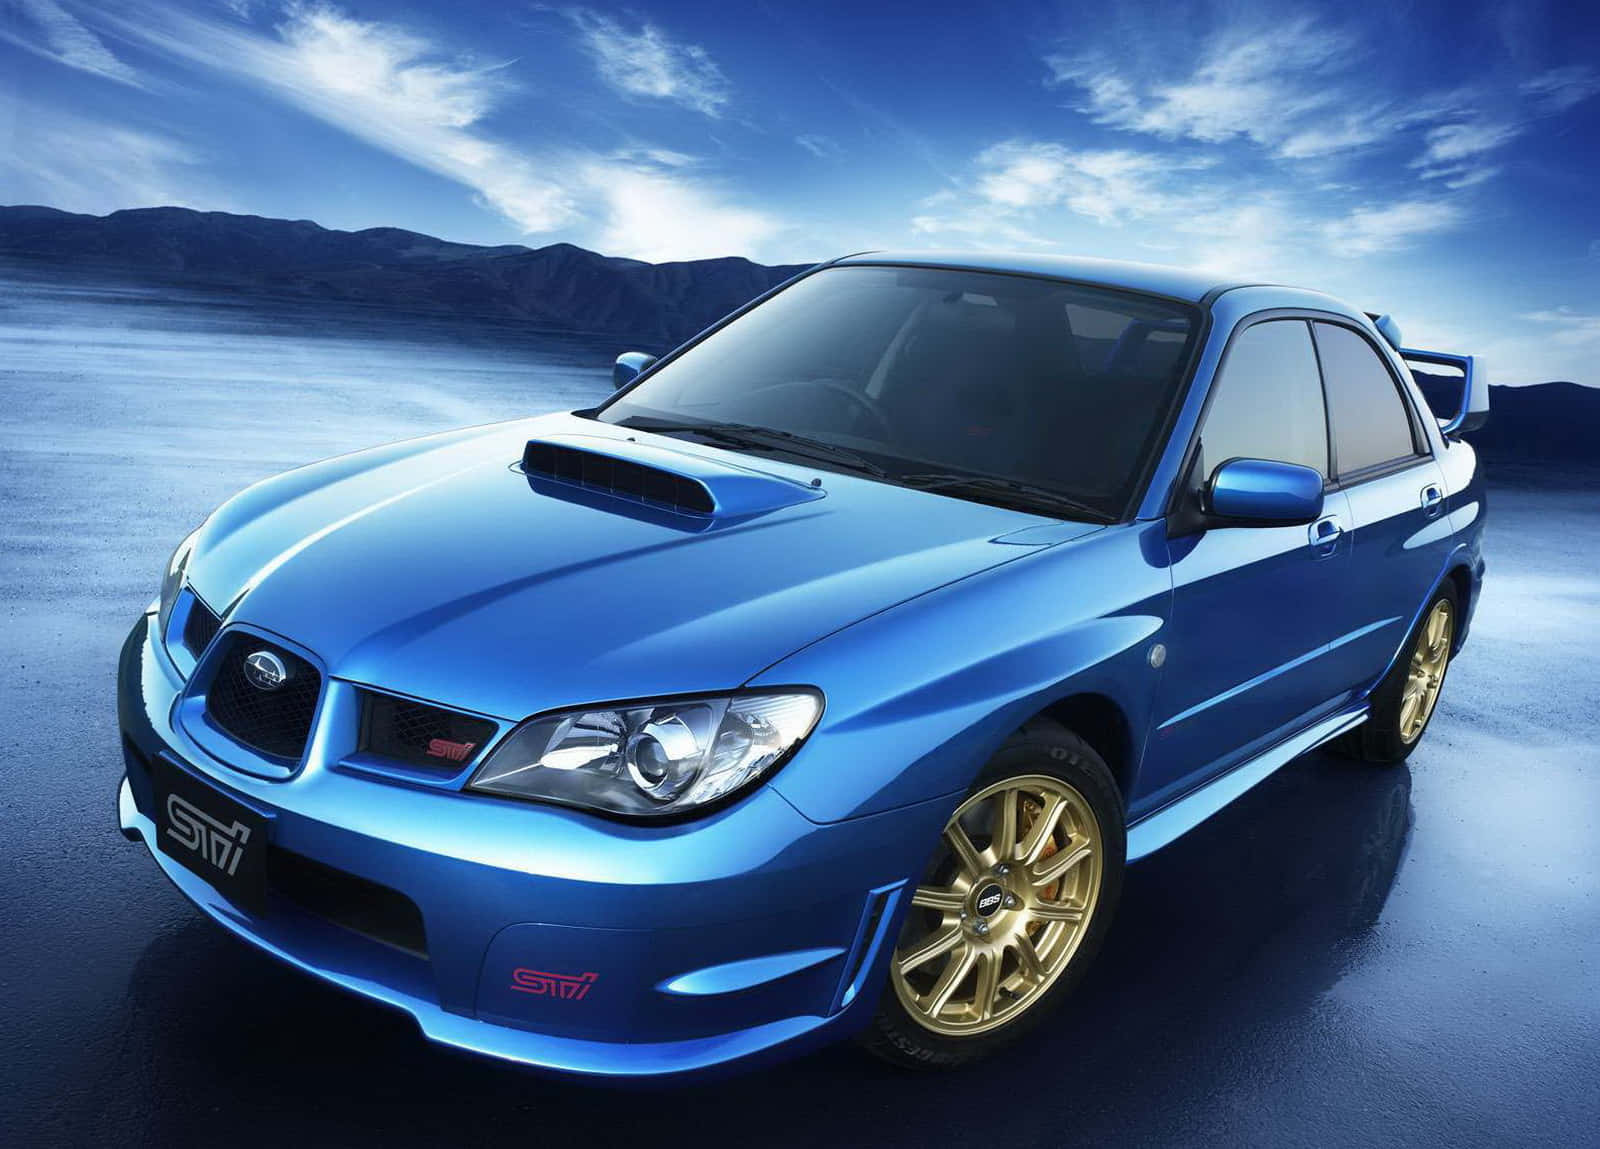 Stunning Subaru Impreza In Action Wallpaper